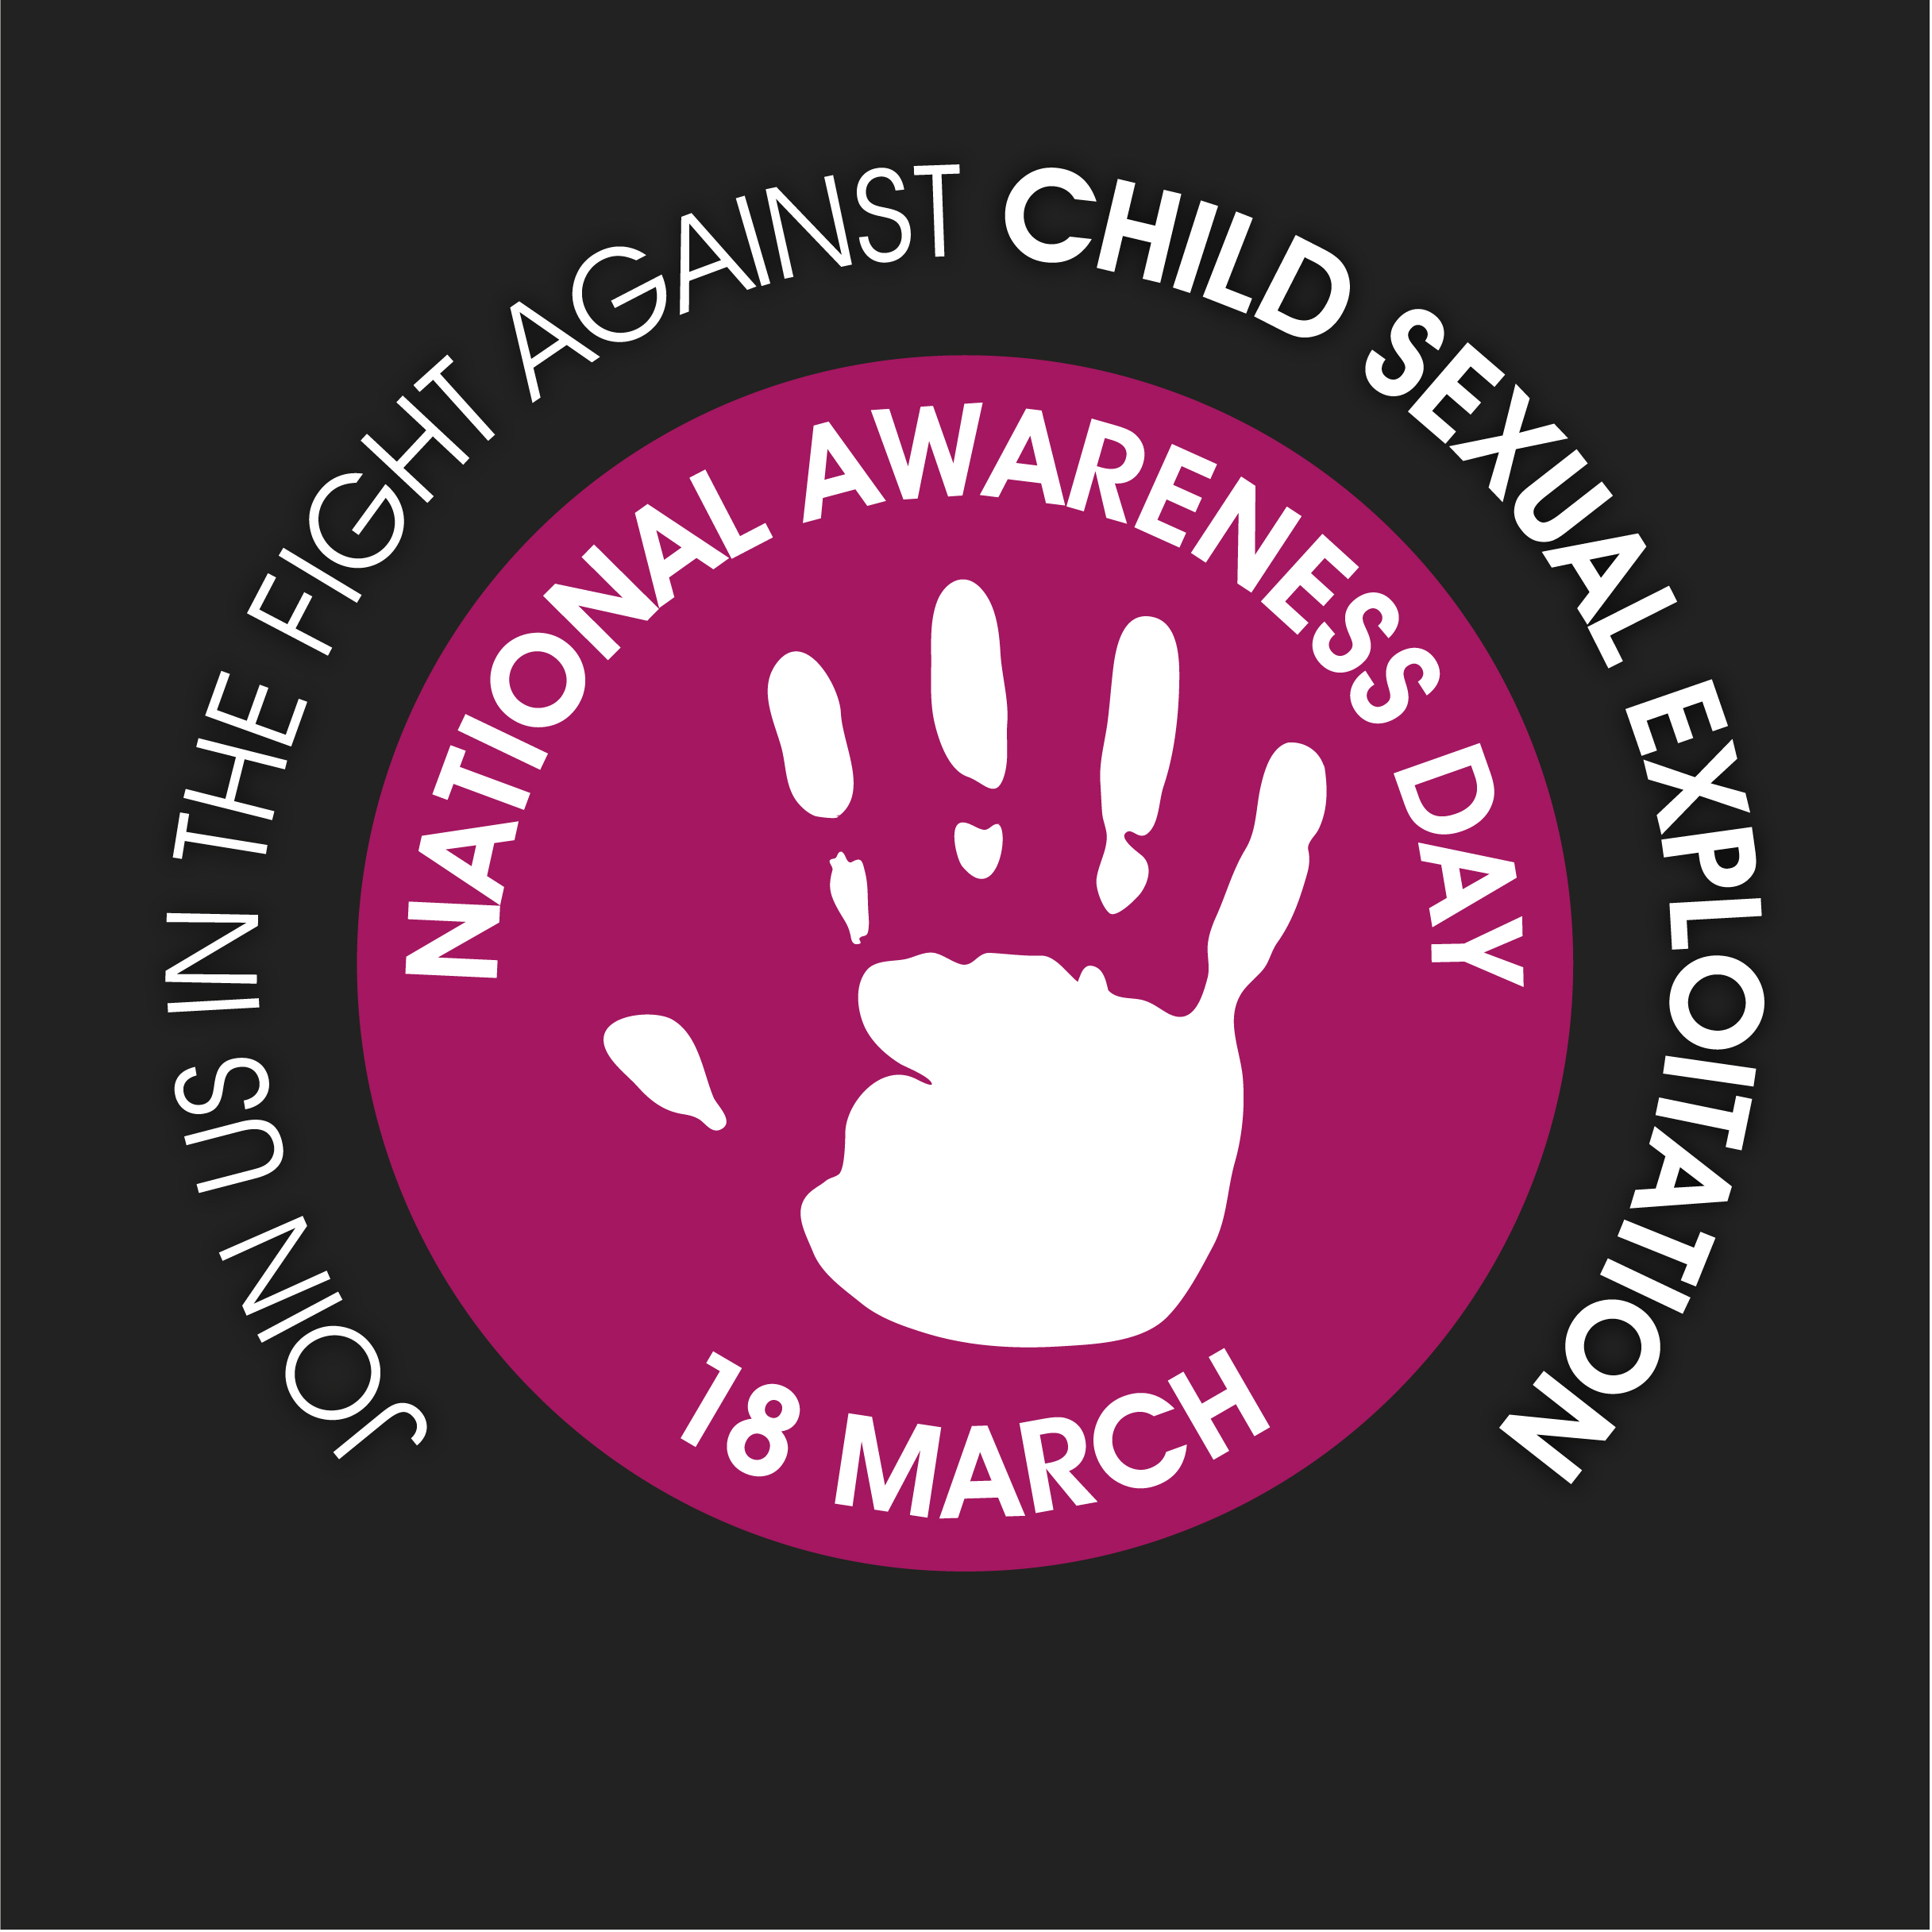 National Child Sexual Exploitation Awareness Day